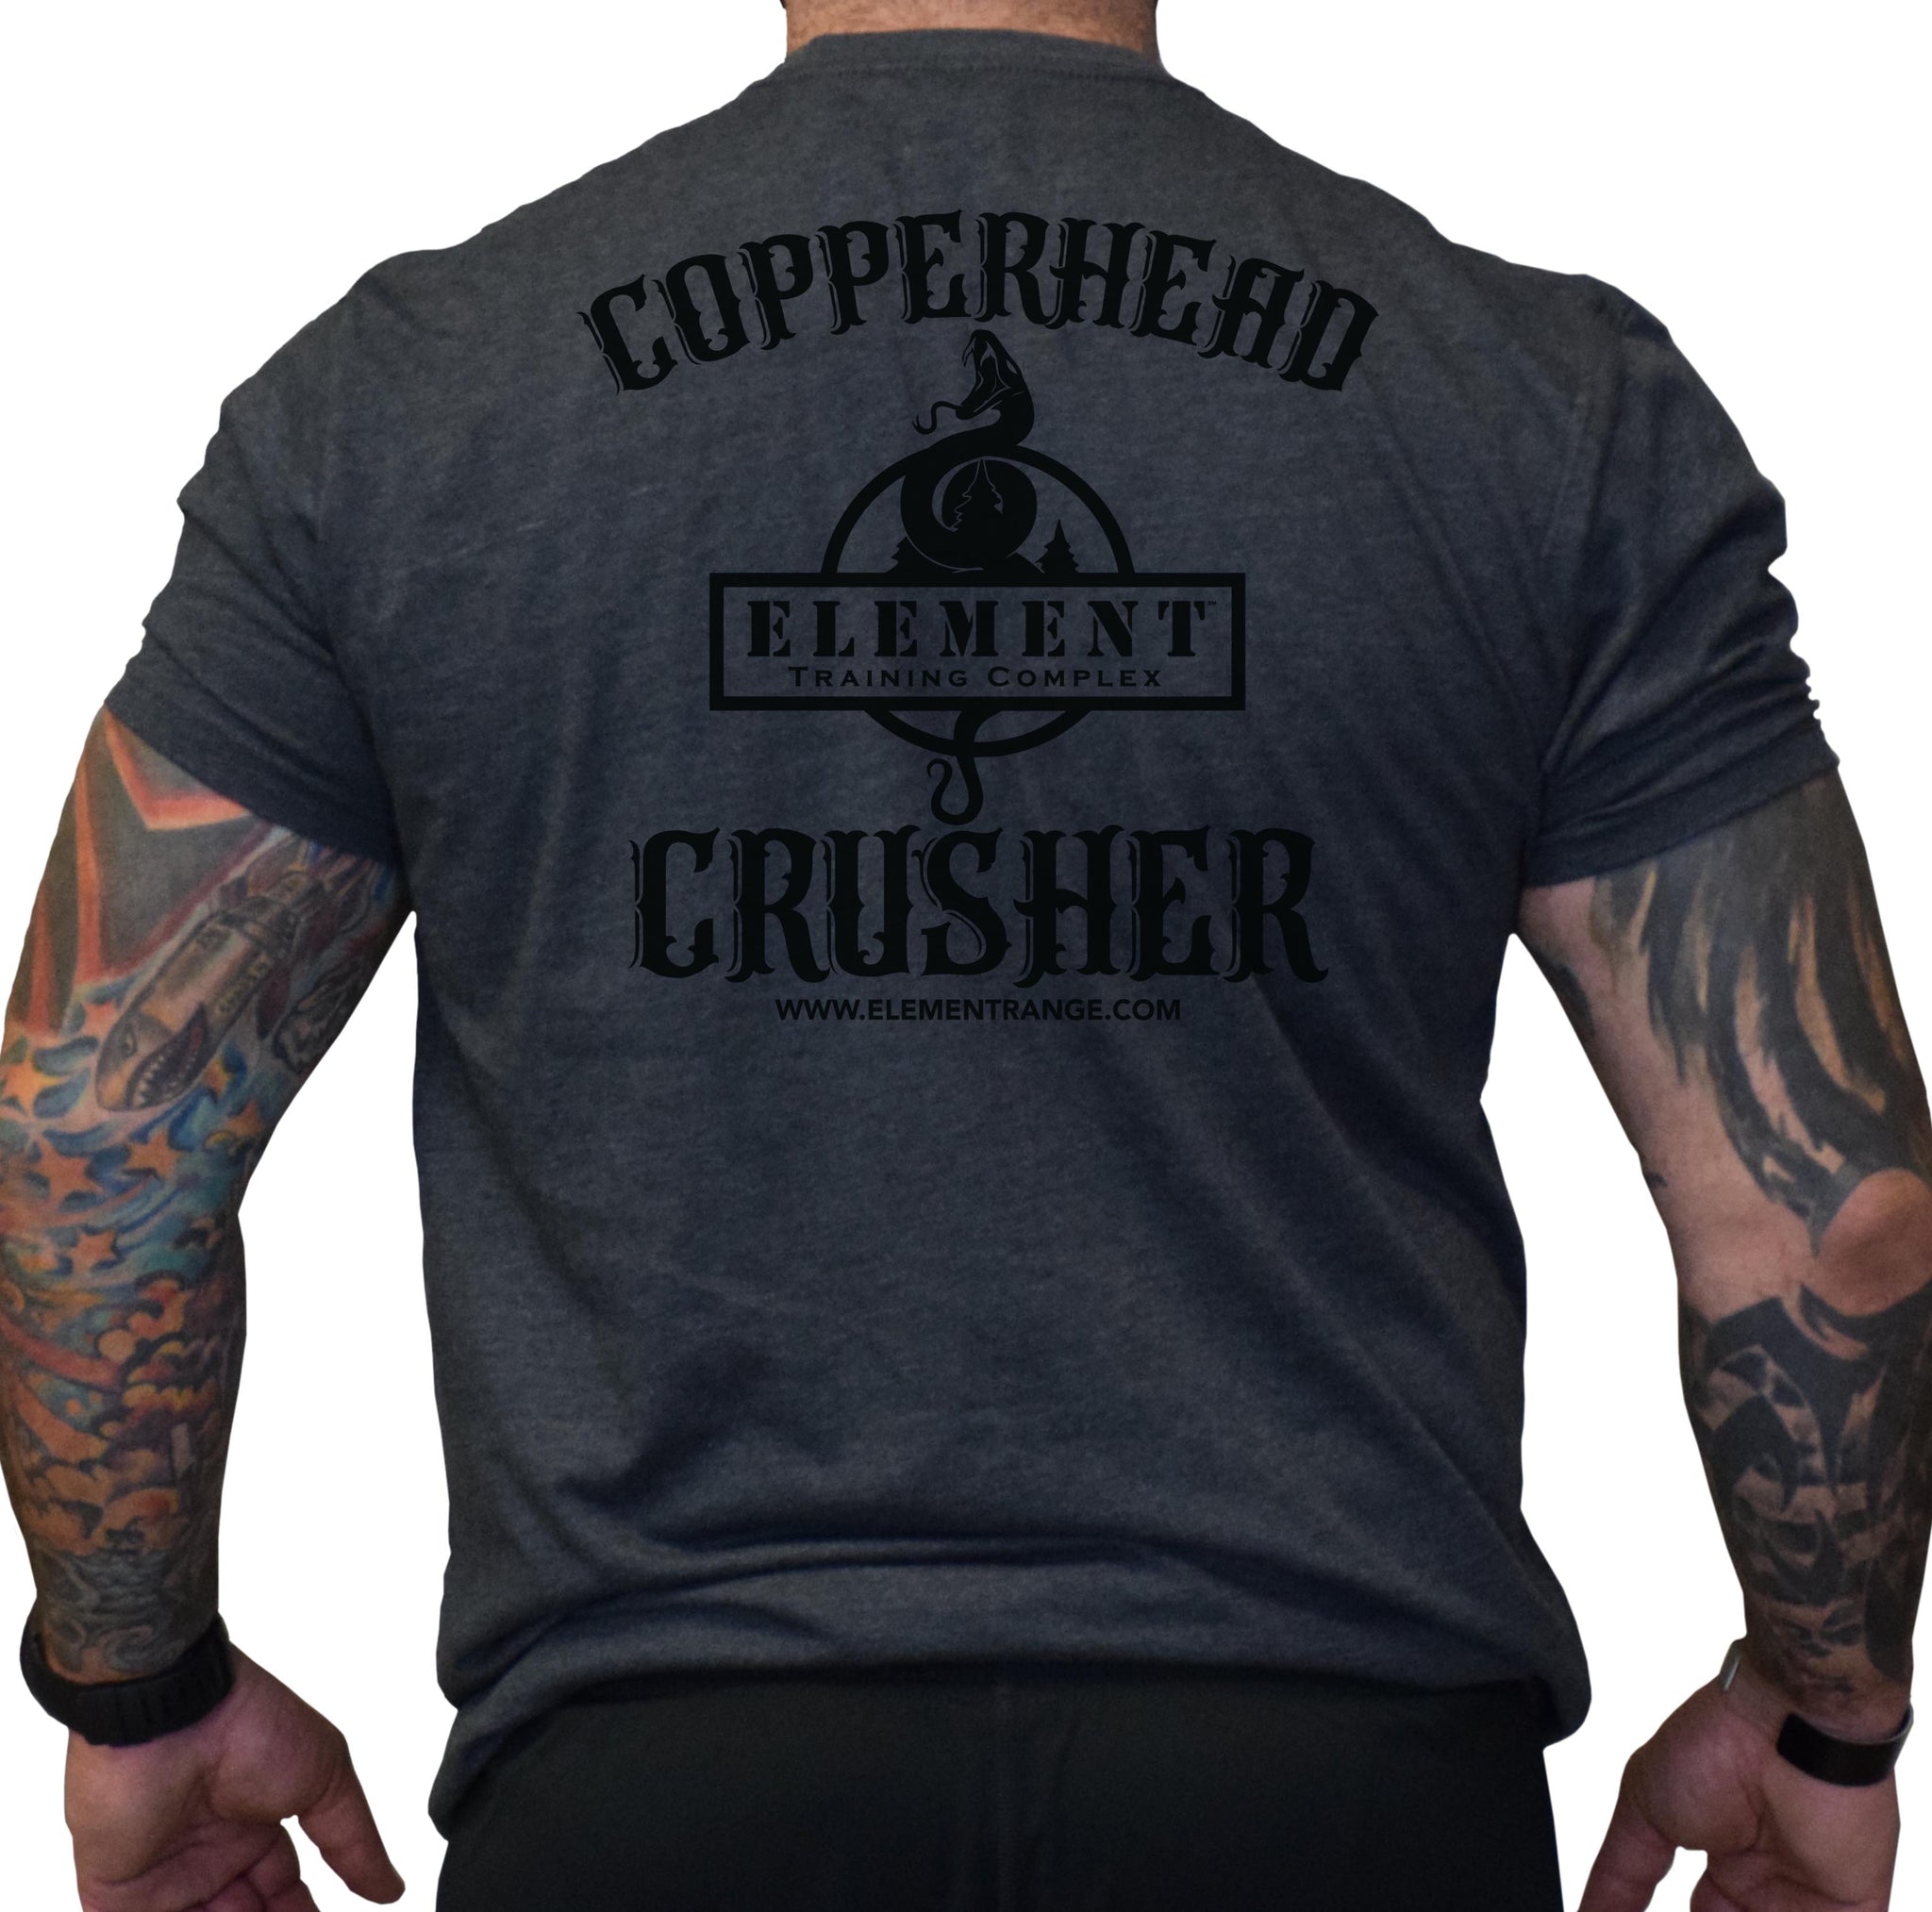 Copperhead Crusher T-Shirt